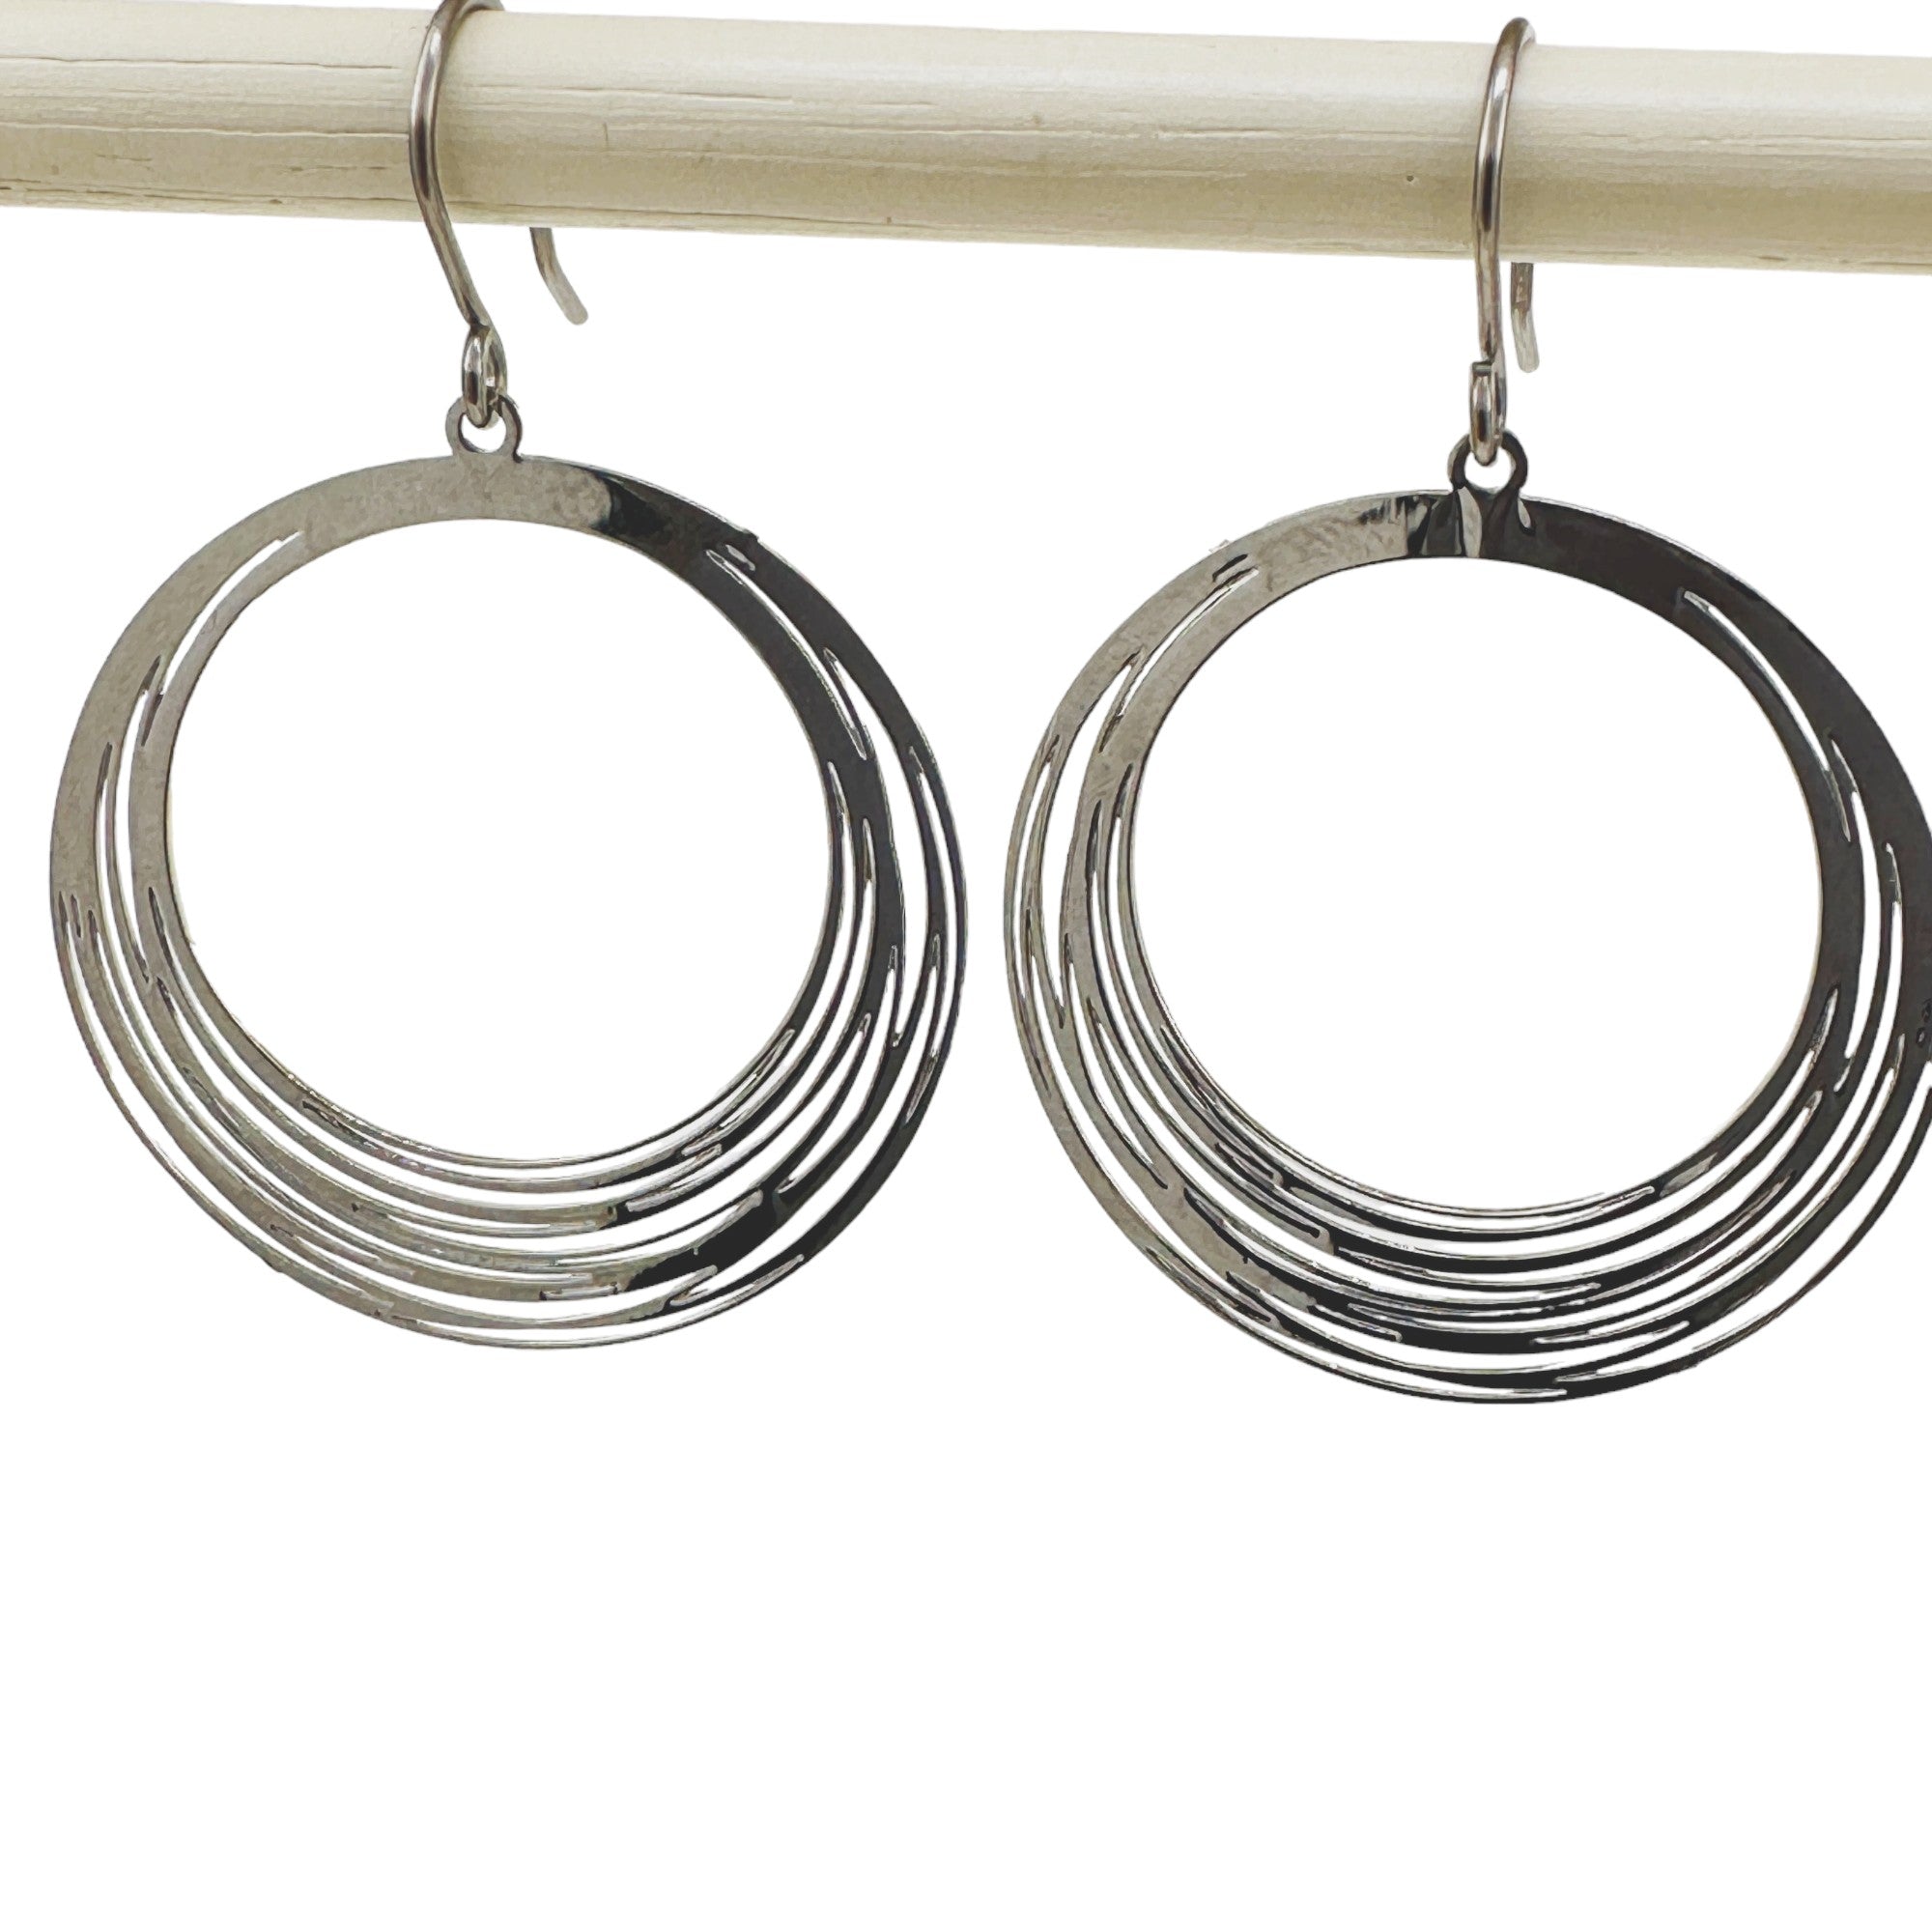 Gold /Silver / String Ring earrings